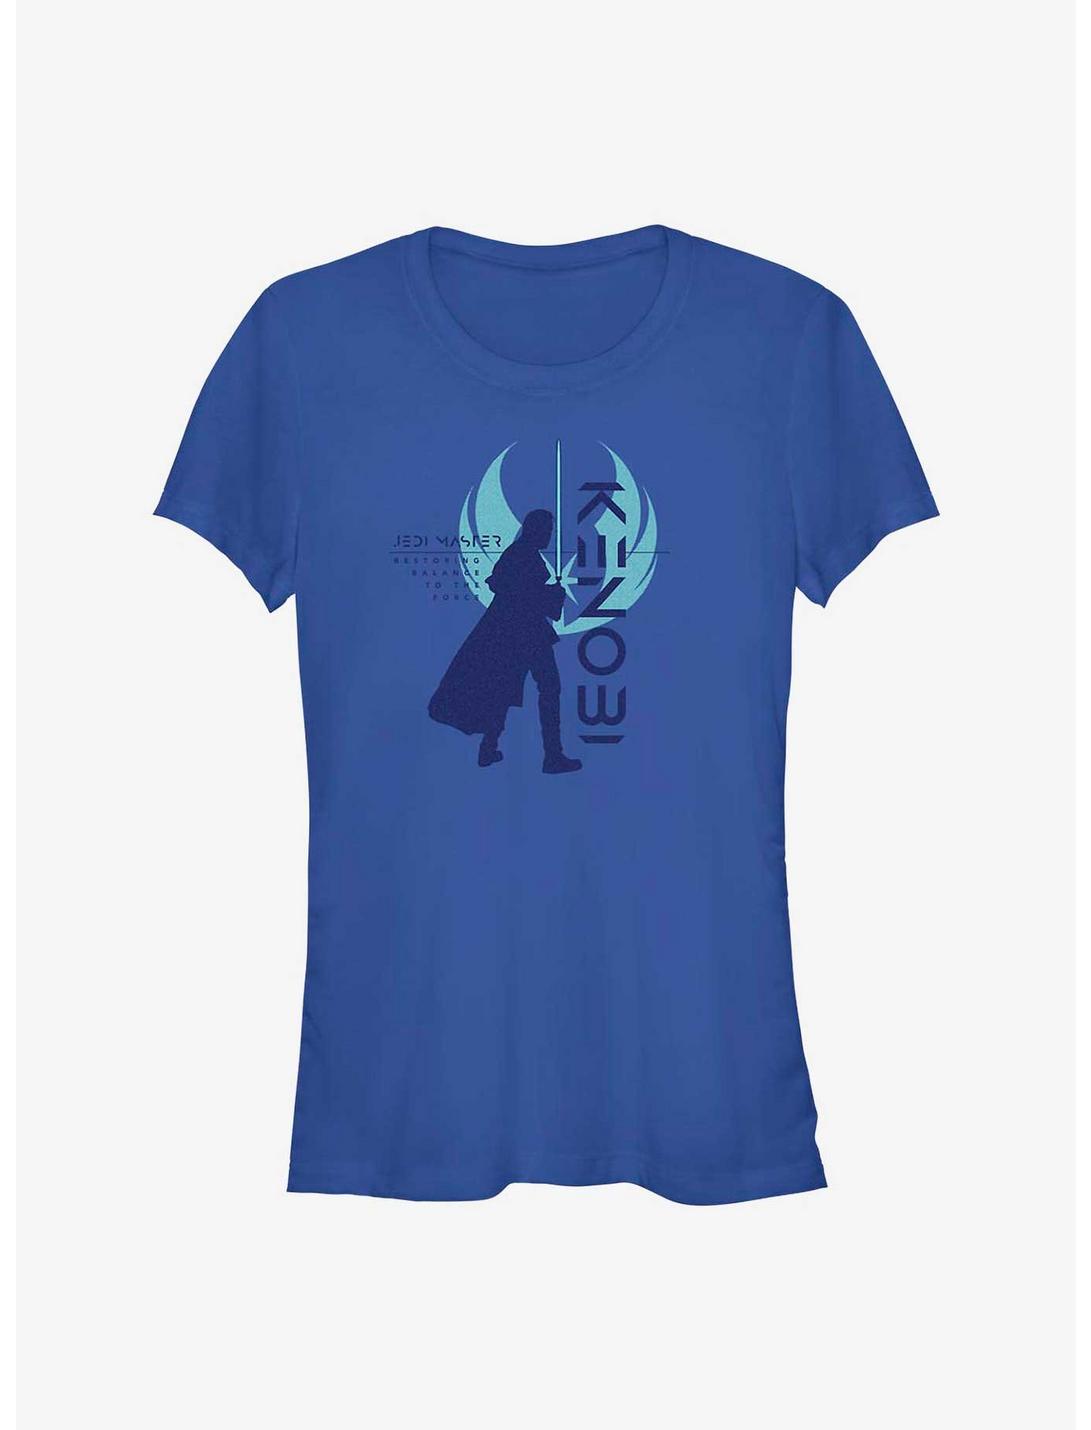 Star Wars Obi-Wan Kenobi Resistance Silhouette Girls T-Shirt, ROYAL, hi-res